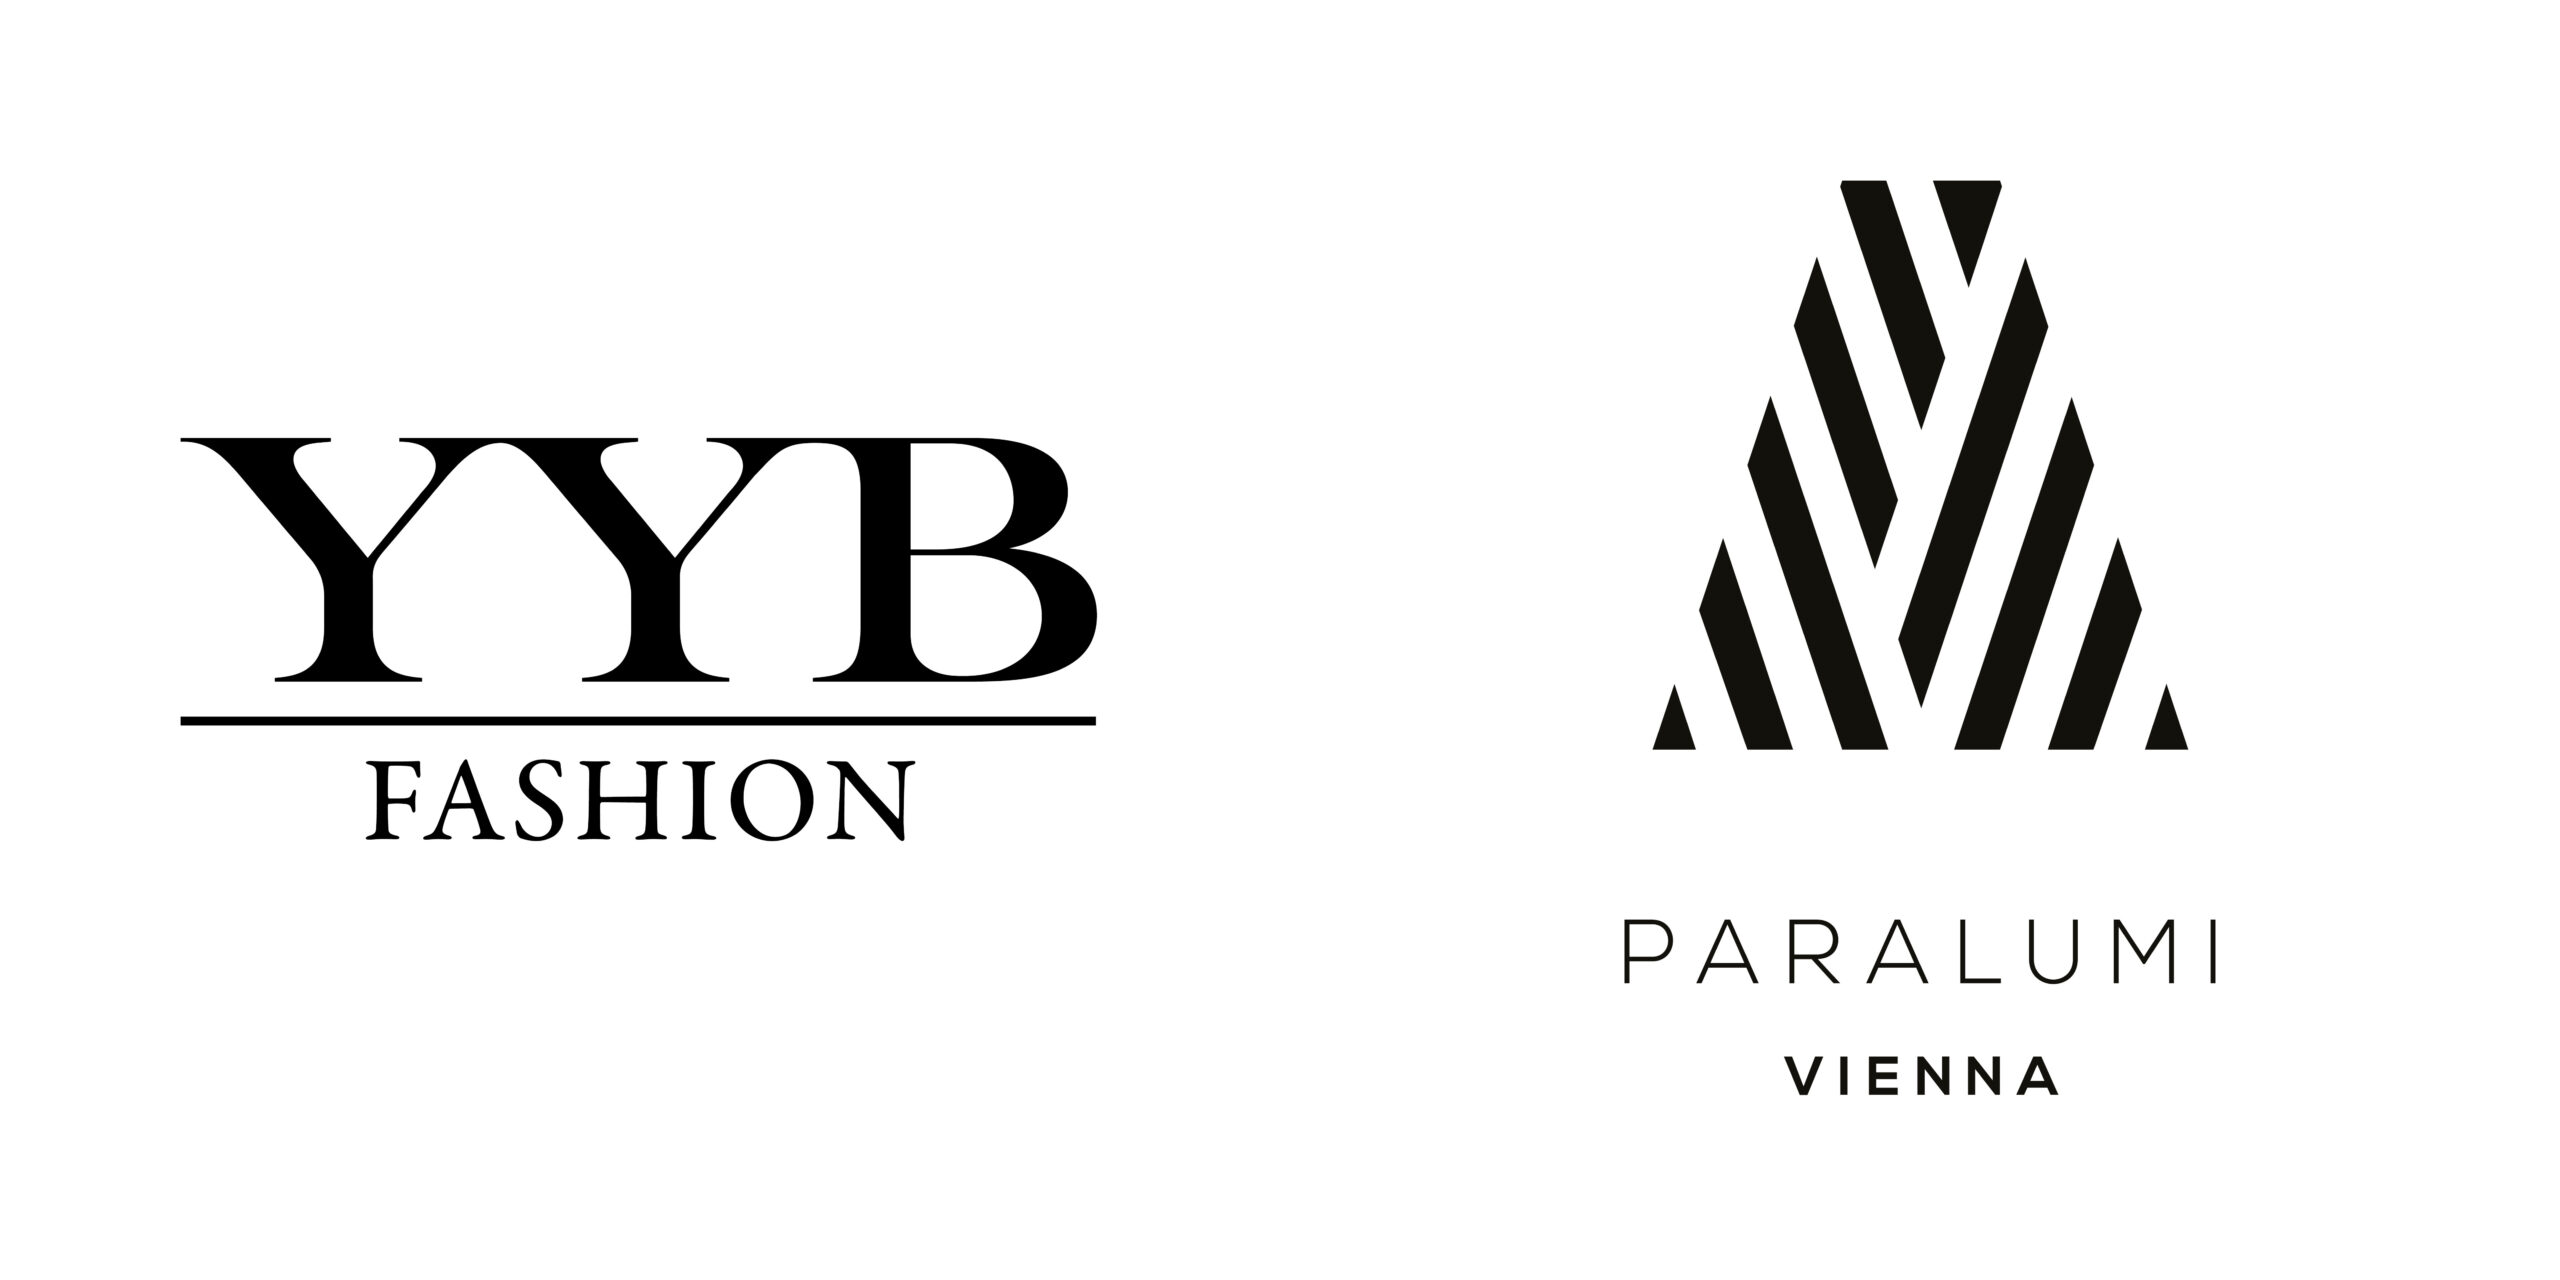 YYB-FASHION & PARALUMI-VIENNA